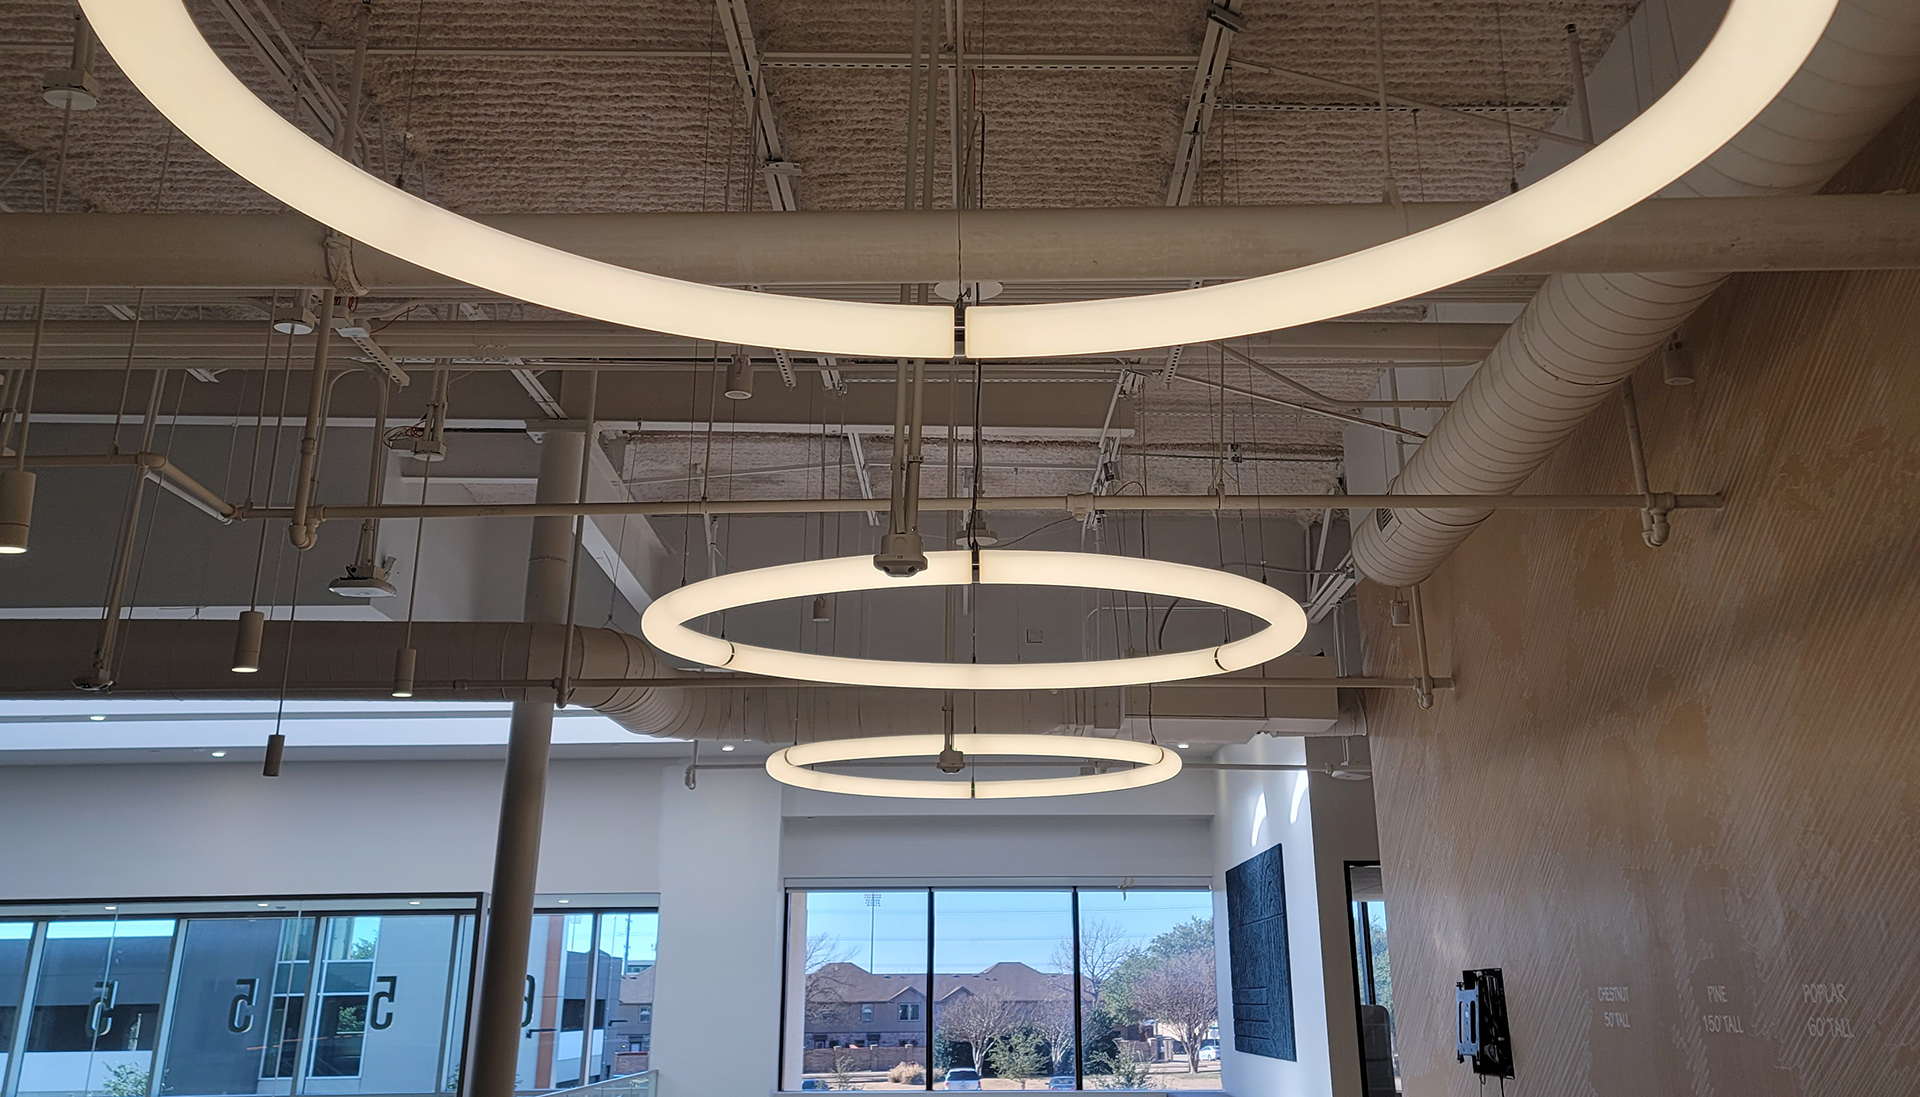 Circular light fixtures hang from ceiling